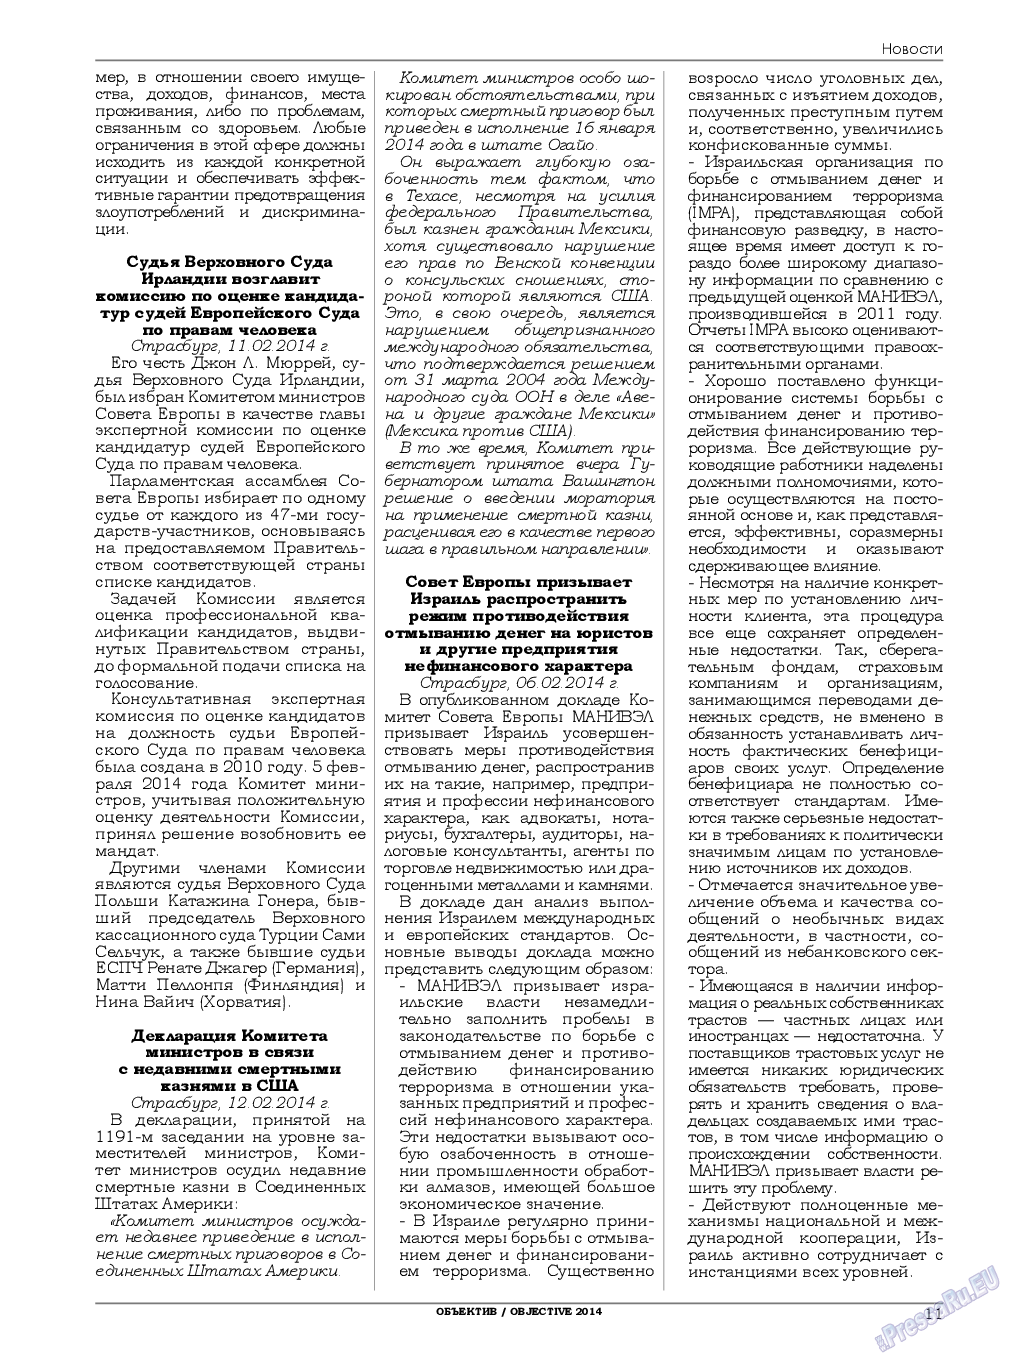 Объектив EU, журнал. 2014 №2 стр.11